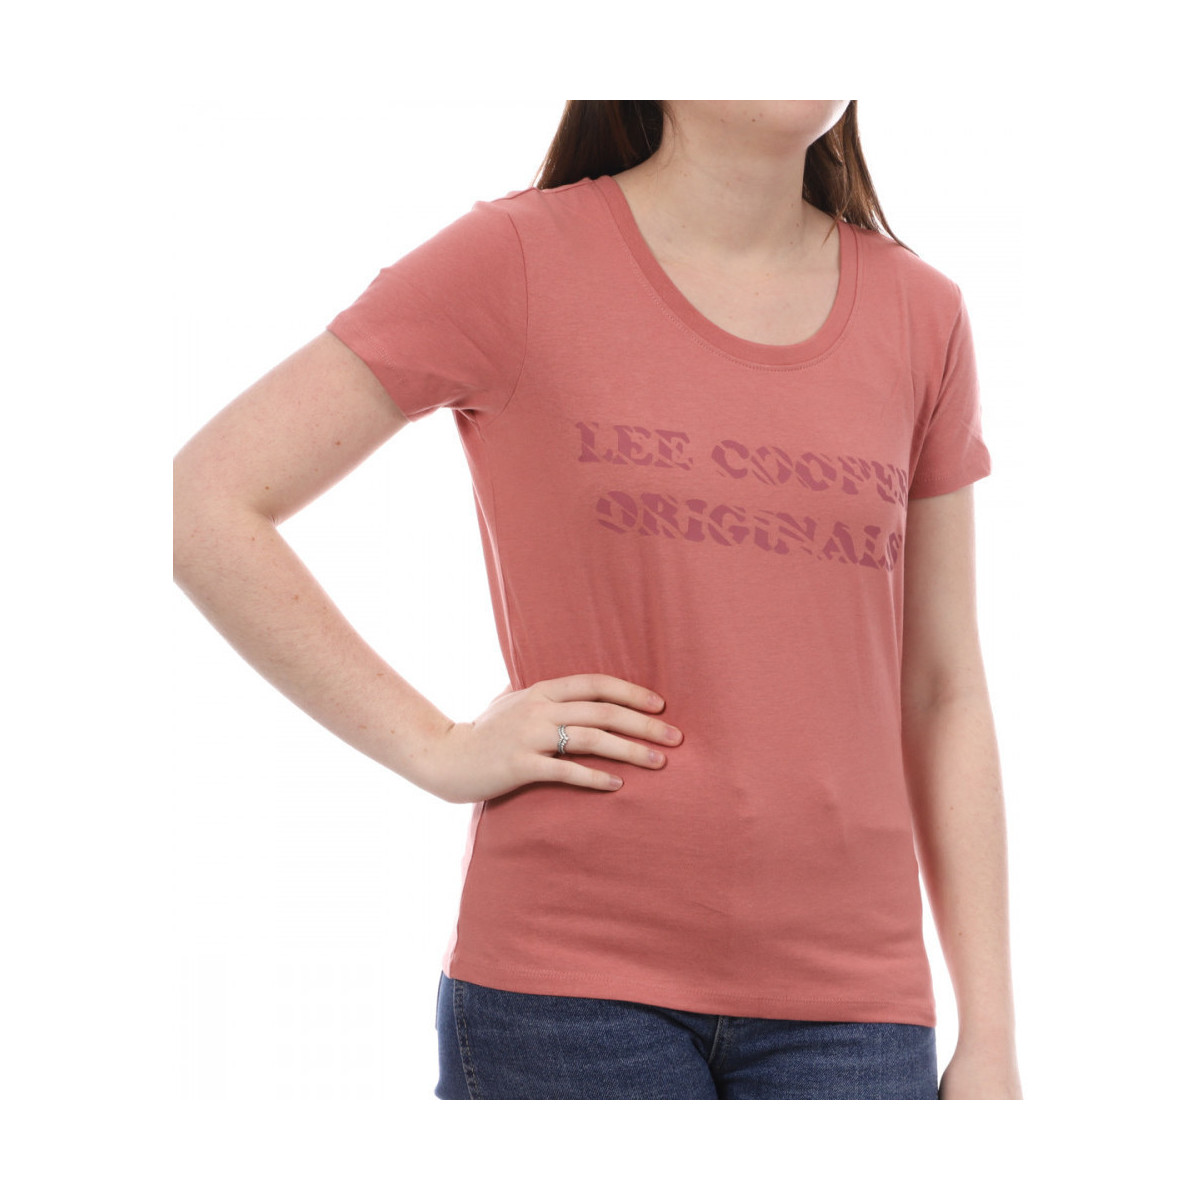 Vêtements Femme Girl's Crop Crew Neck Printed Short Sleeve T-Shirt Shorts Set LEE-009429 Rose